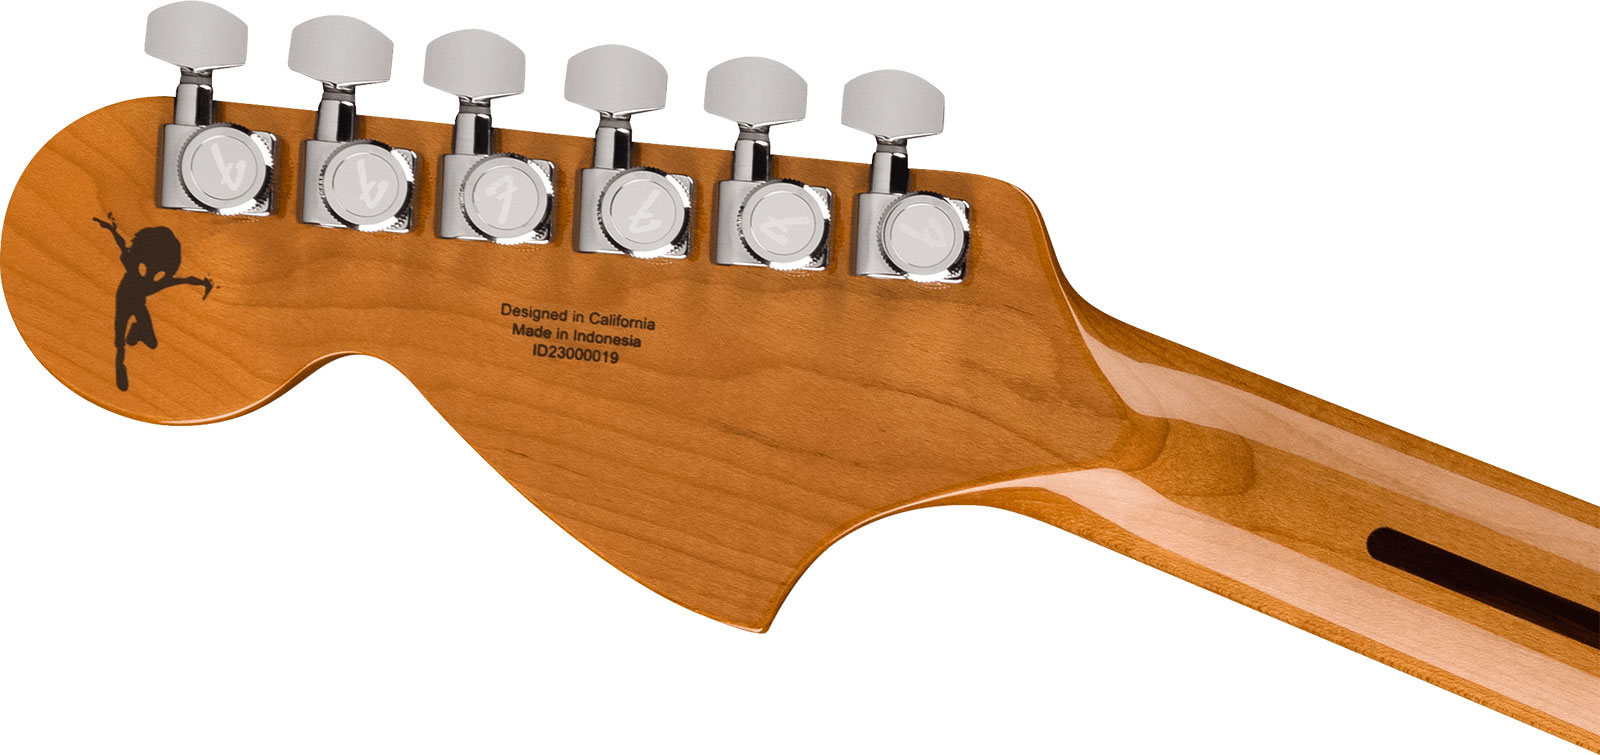 Fender Tom Delonge Starcaster 1h Seymour Duncan Ht Rw - Satin Surf Green - Guitarra eléctrica semi caja - Variation 4